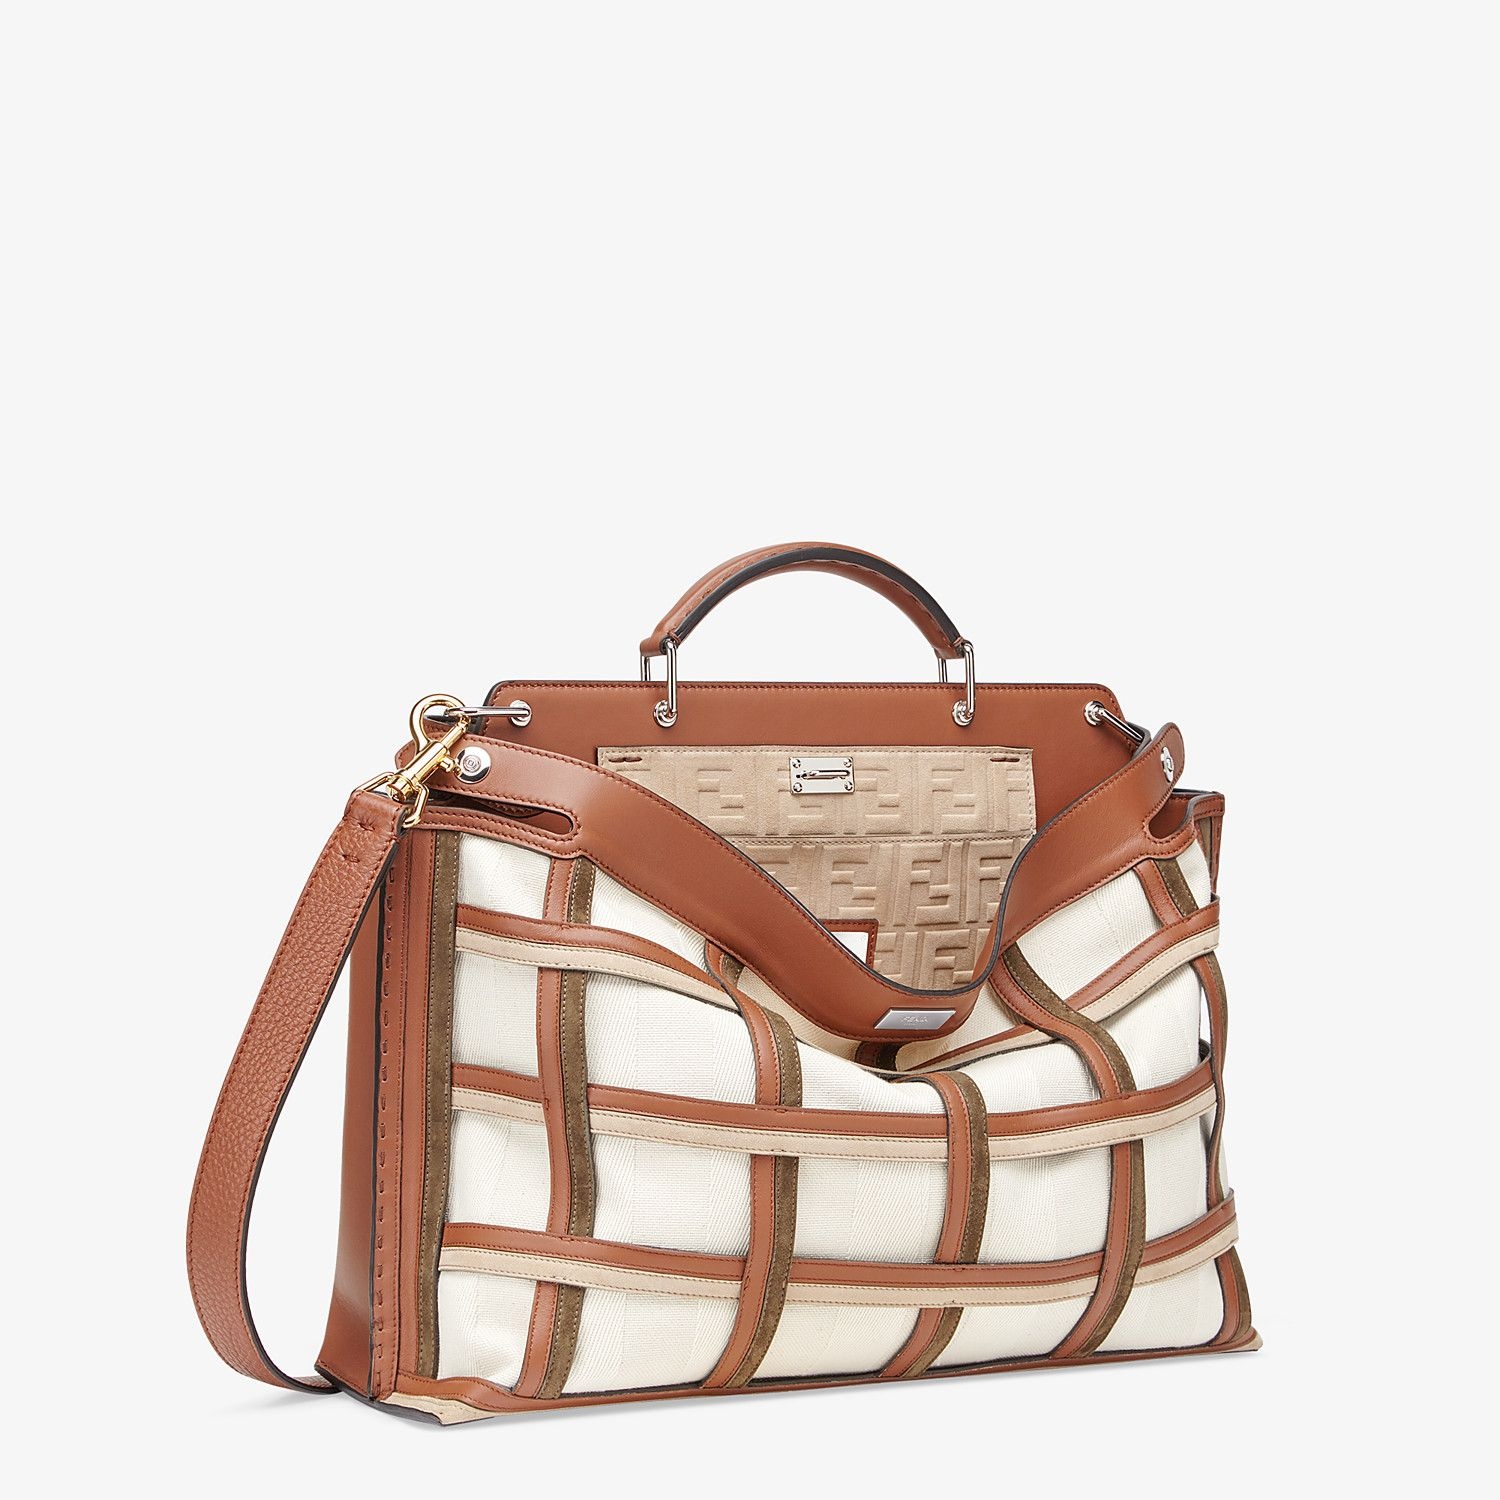 Brown leather bag - 2